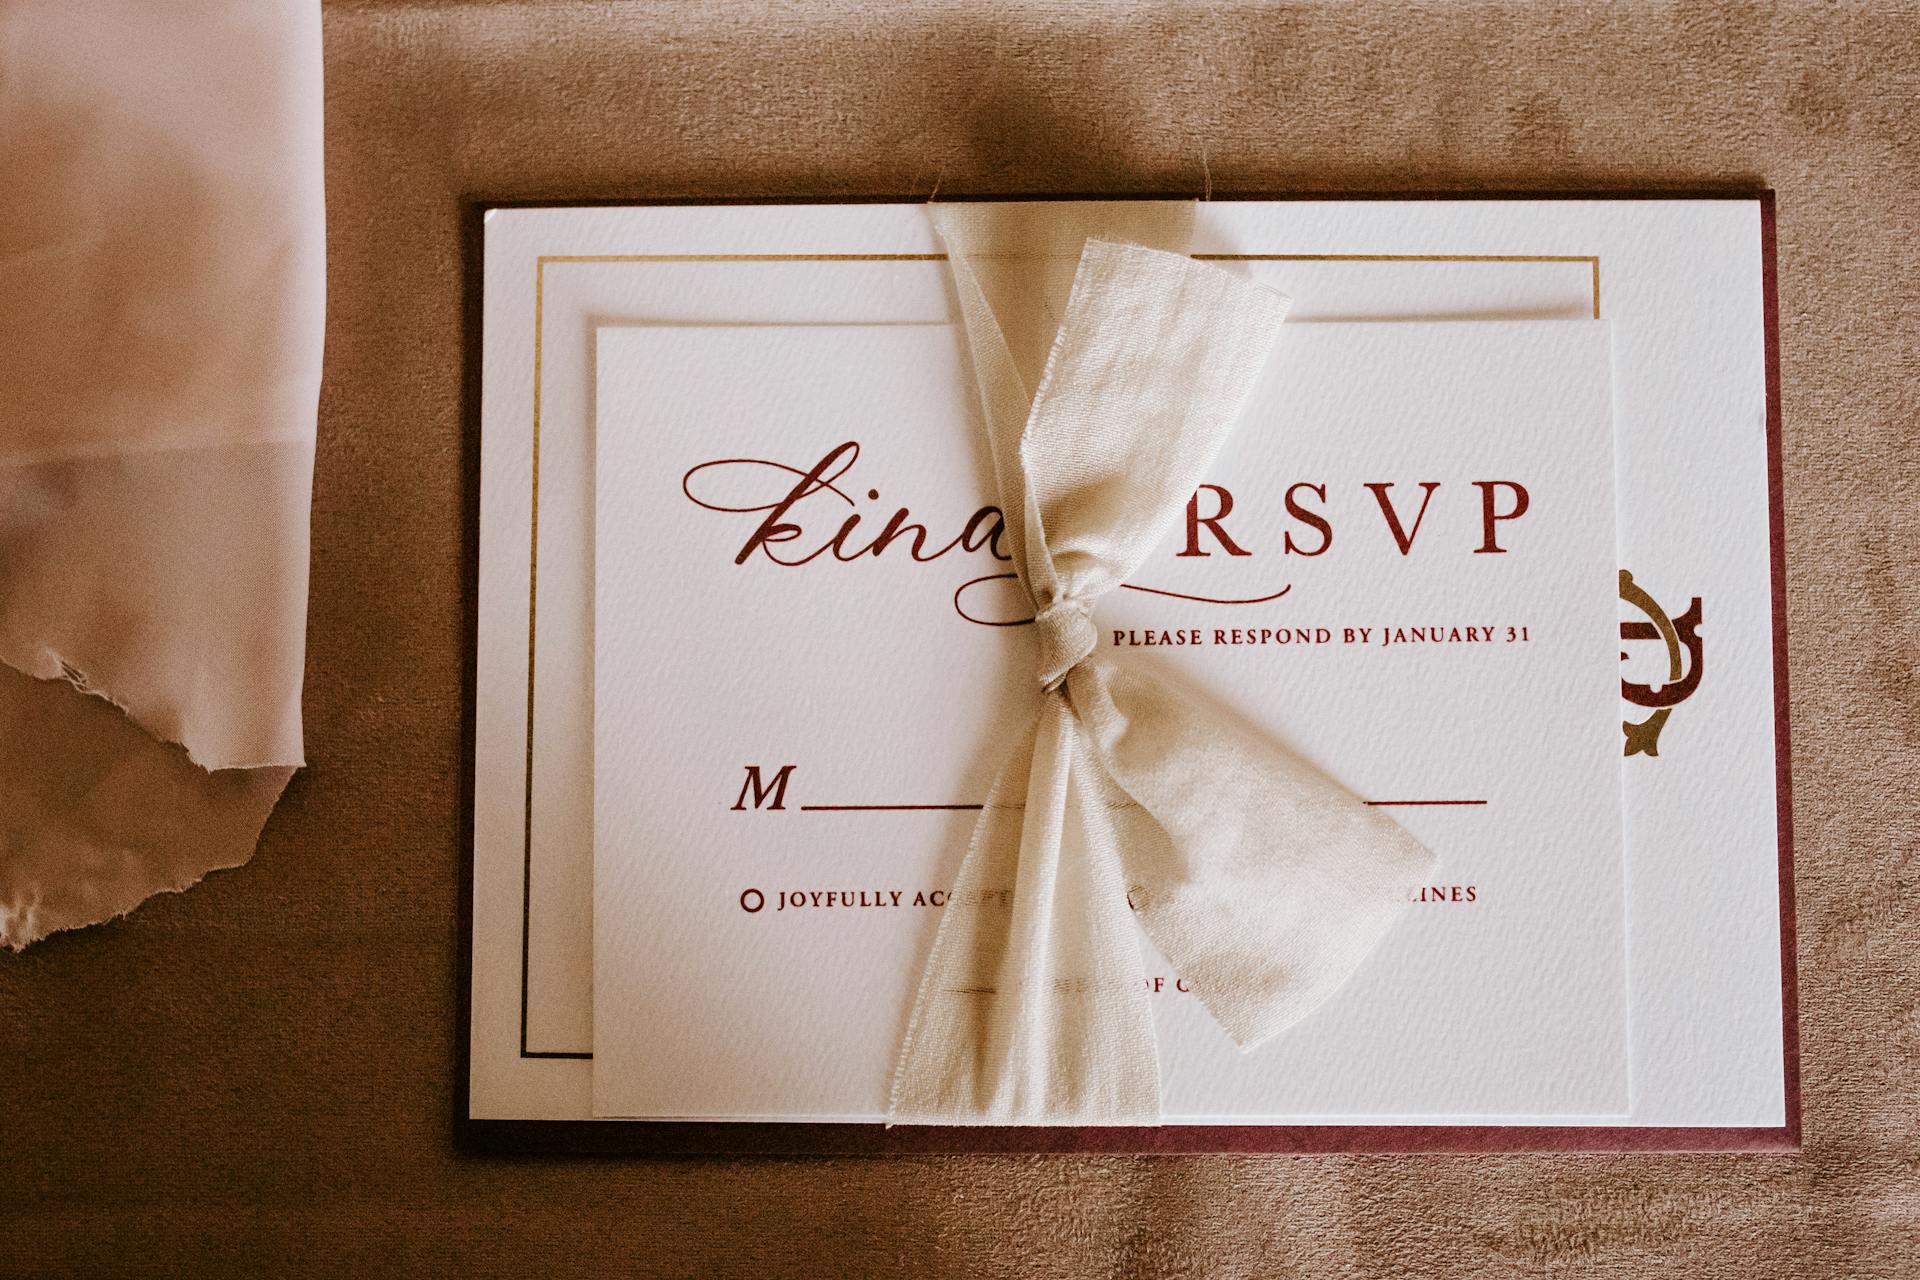 Une invitation de mariage | Source : Pexels